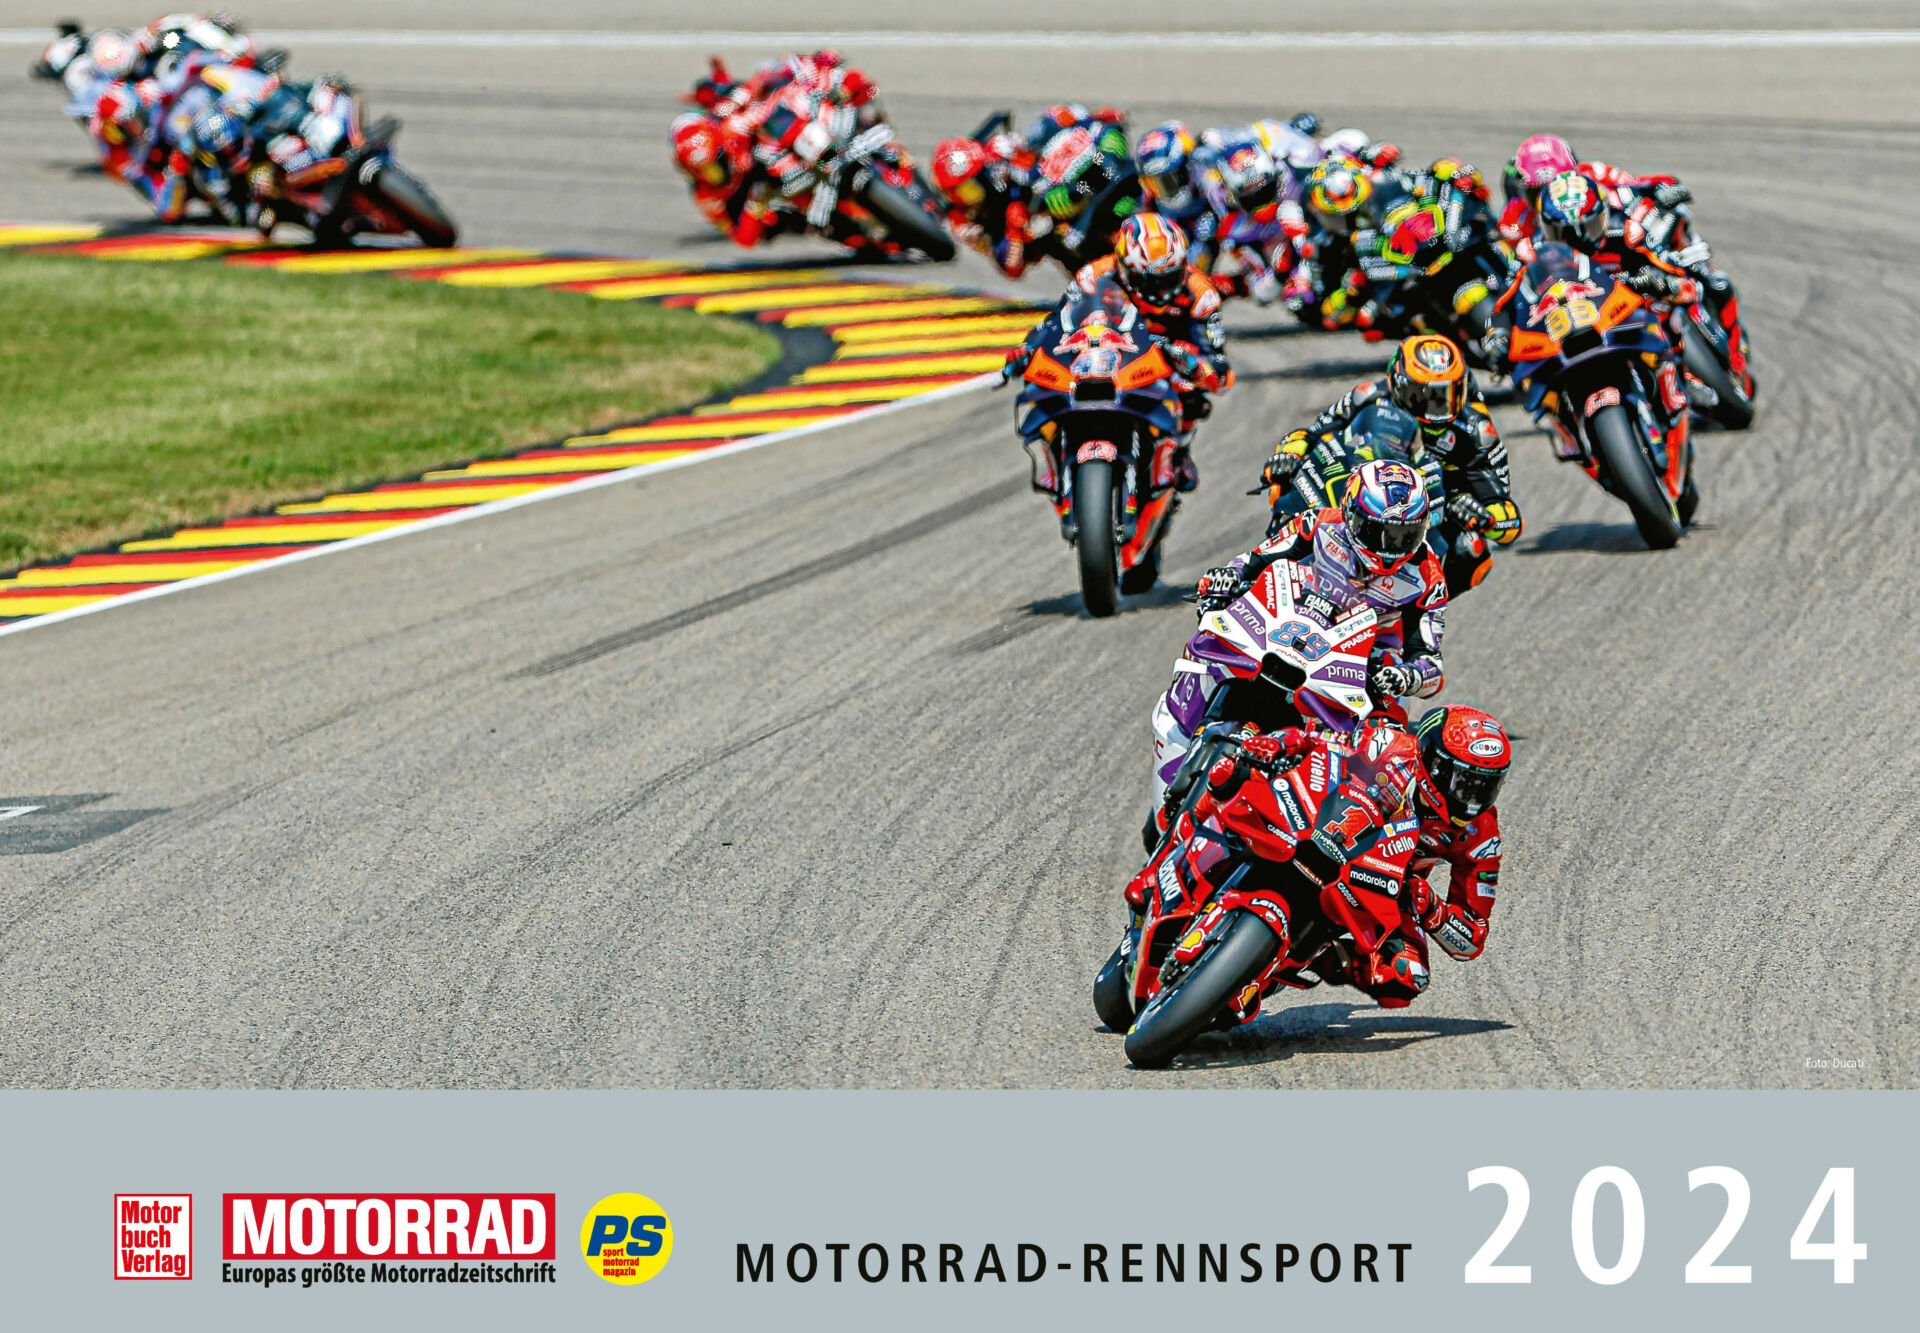 2024 MotoGP Calendar (Updated) - Cycle News